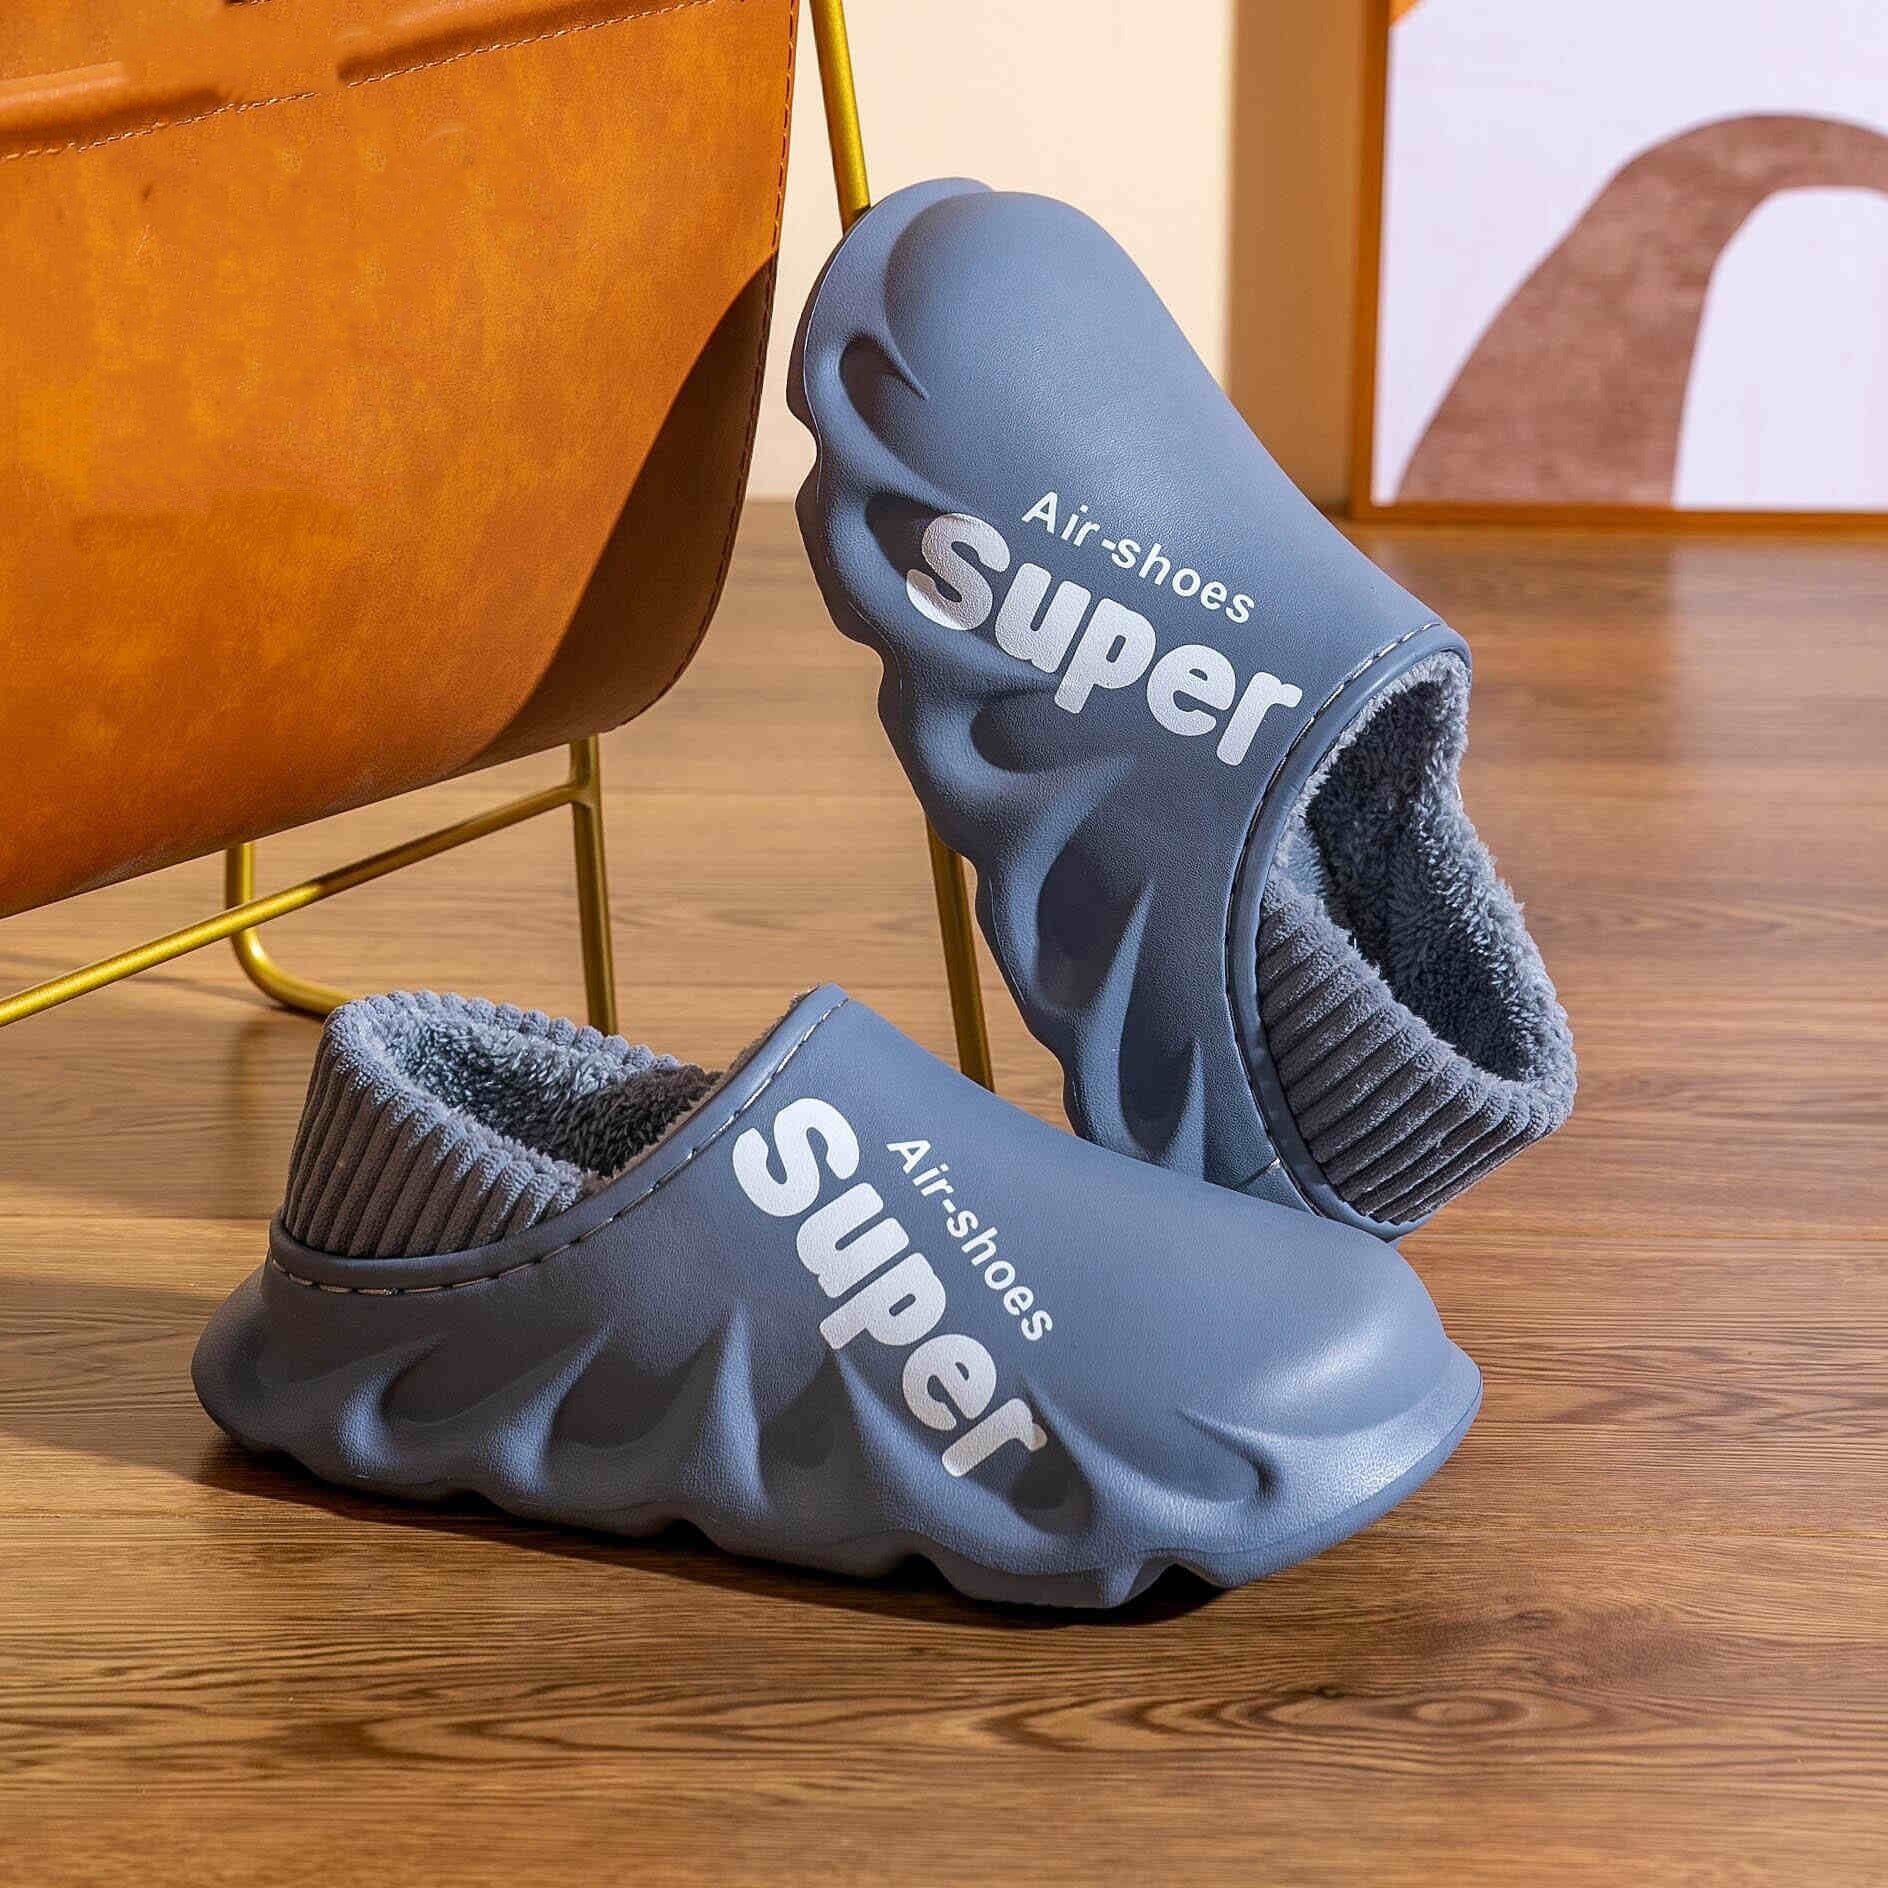 Warm Non-Slip Slippers - Cleevs